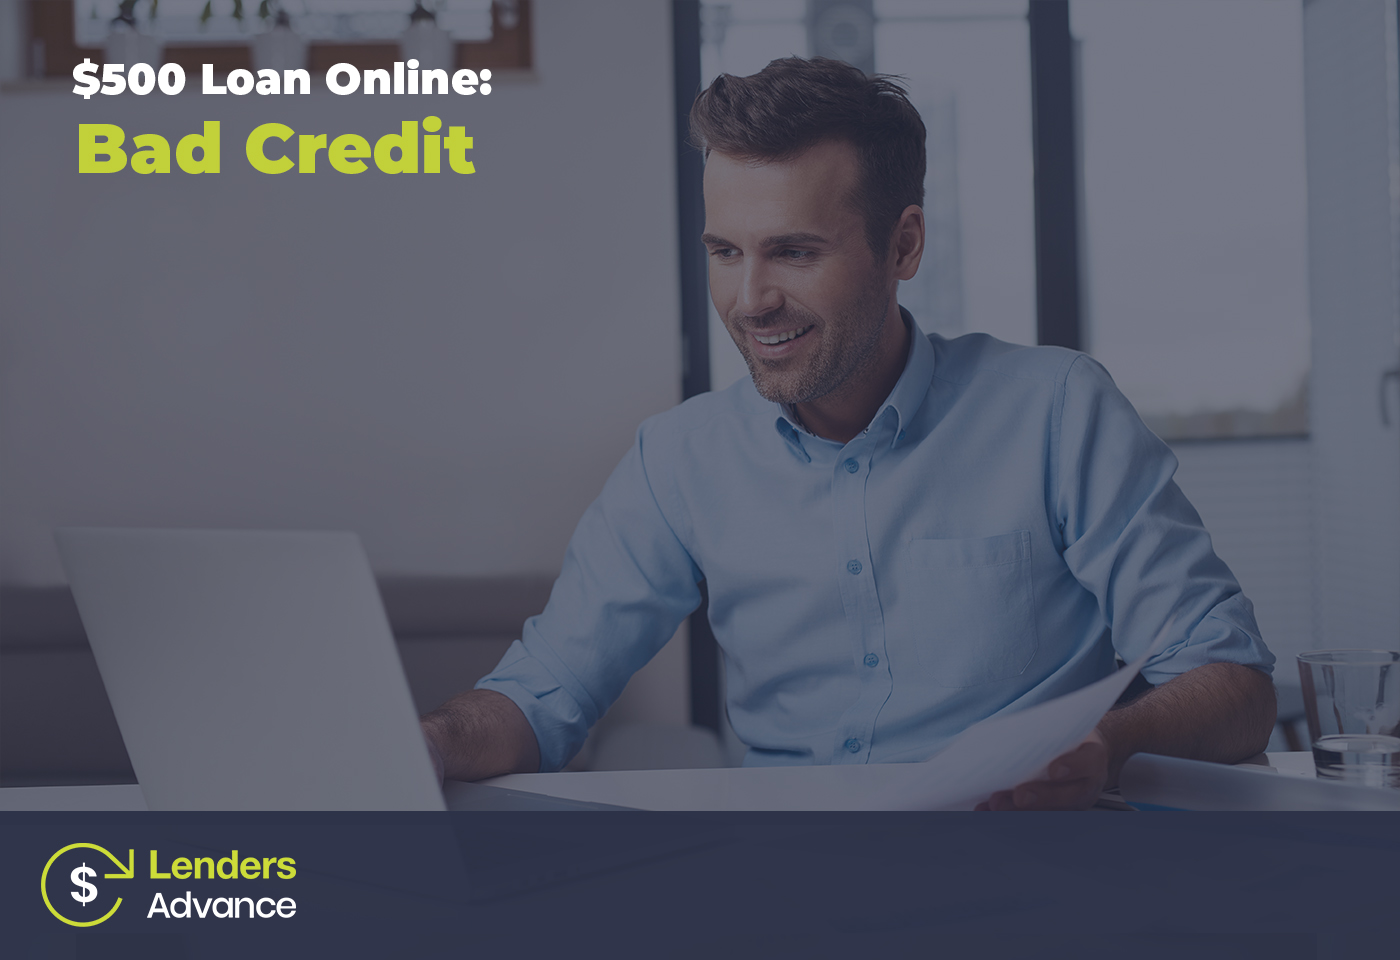 0 Loan Online: Bad Credit